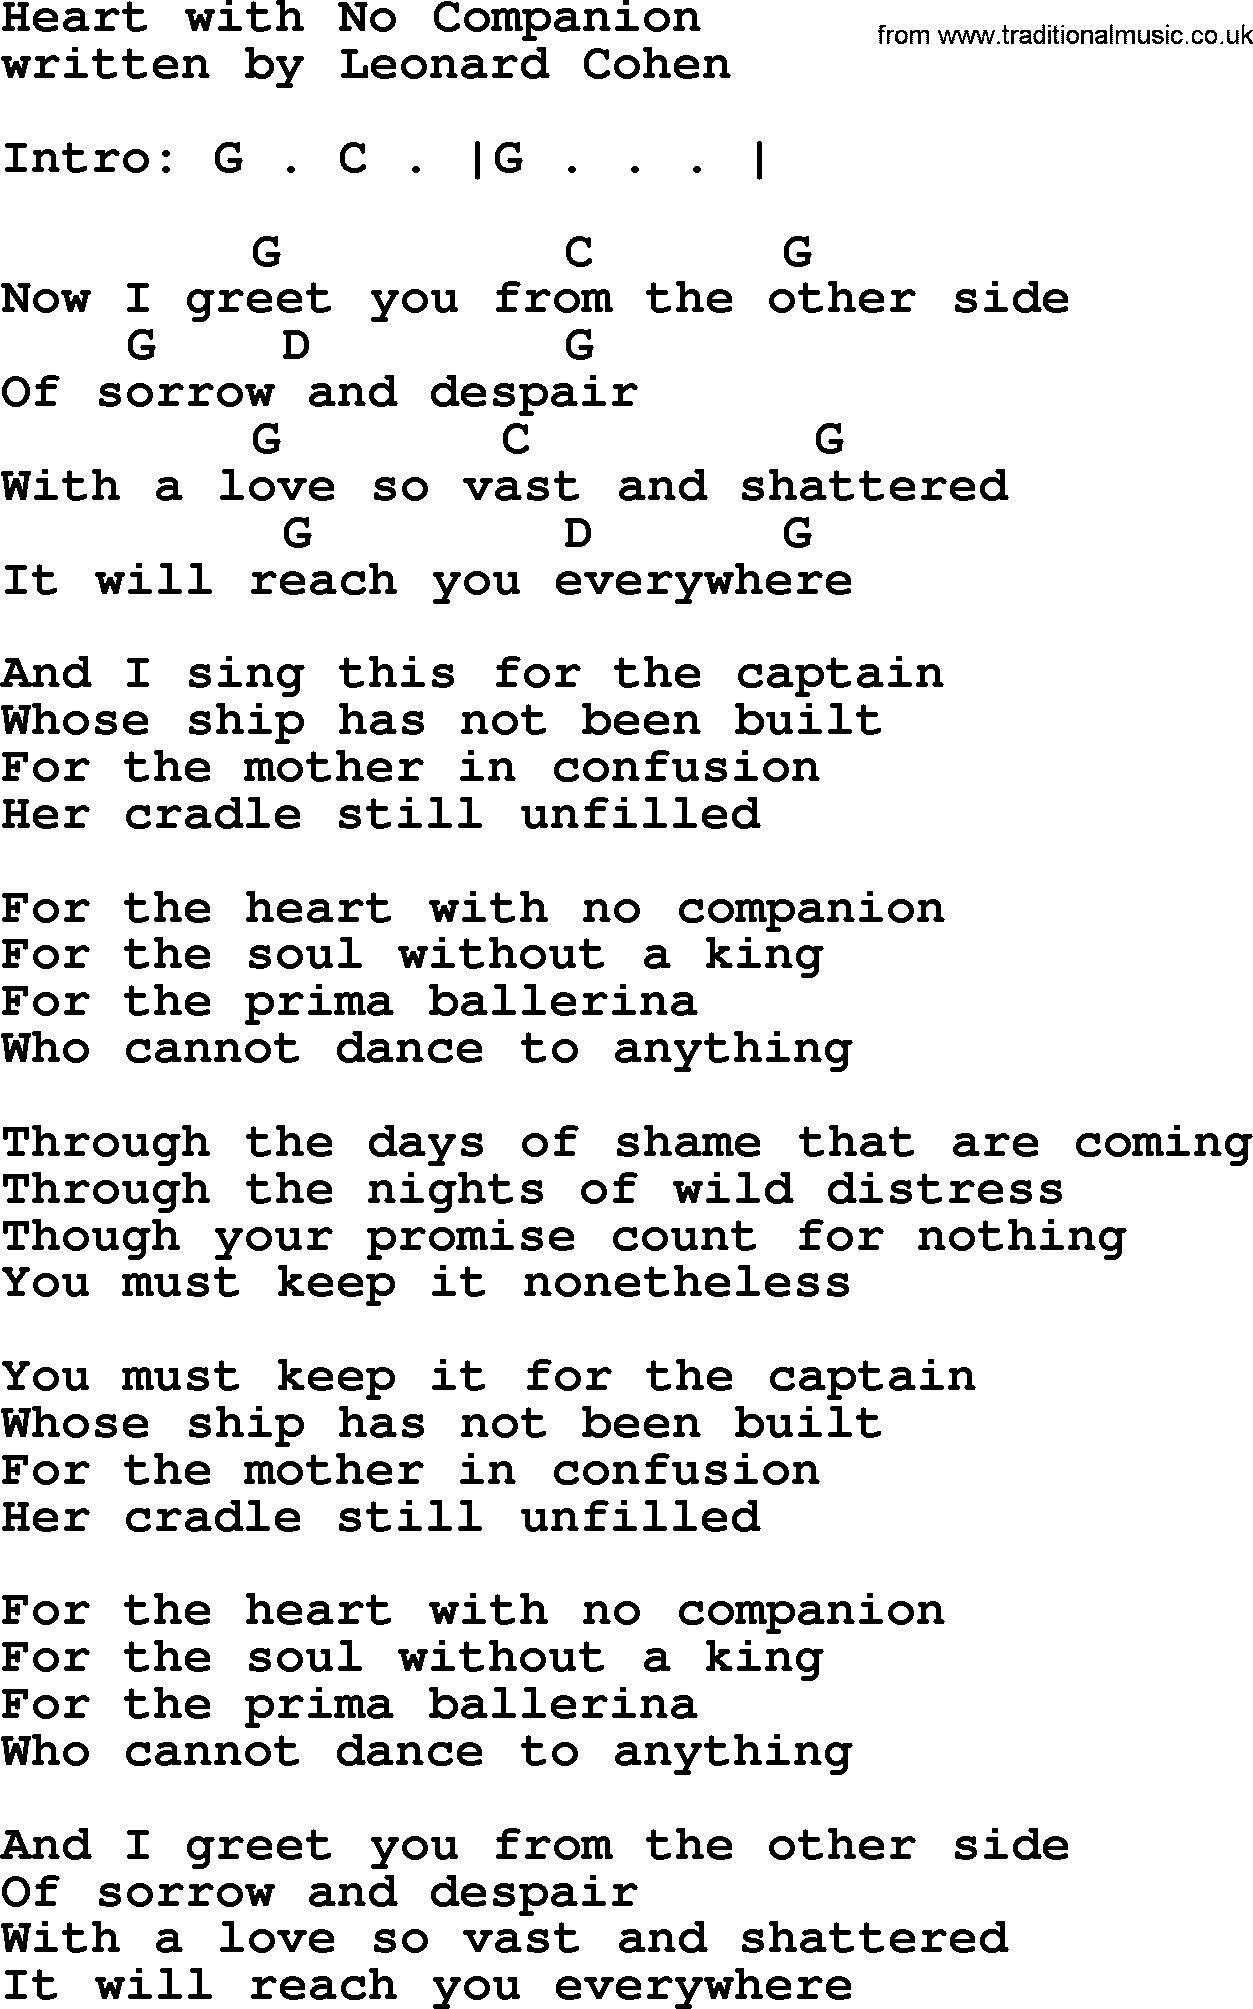 Leonard Cohen song Heart With No Companion, lyrics and chords